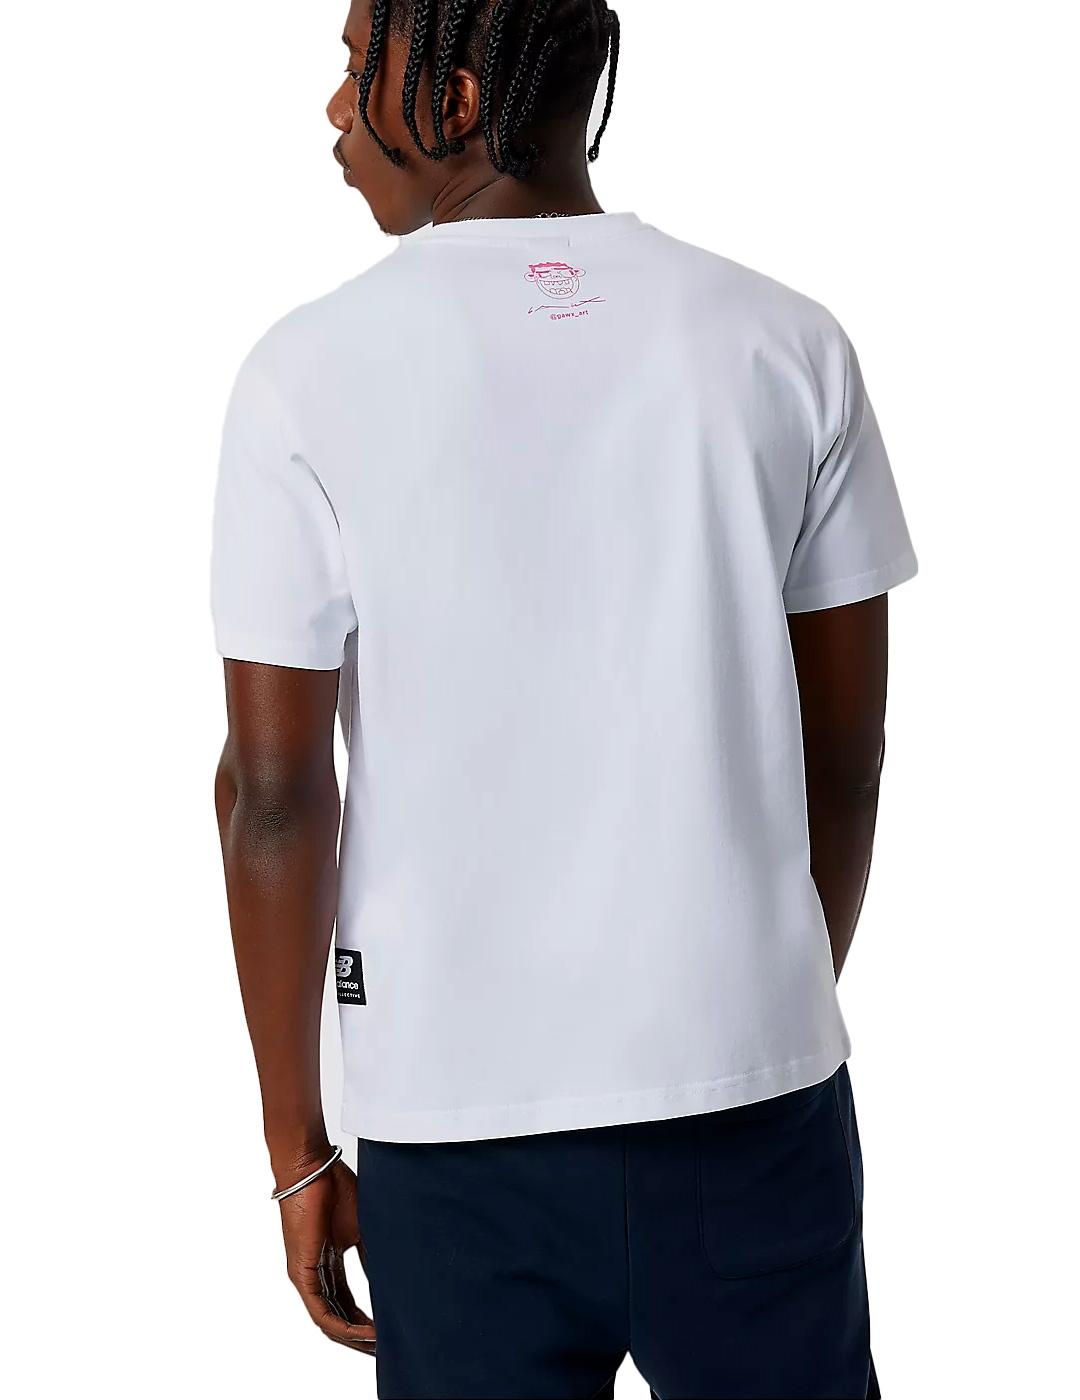 Camiseta New Balance Artist Pack Gawx Blanco